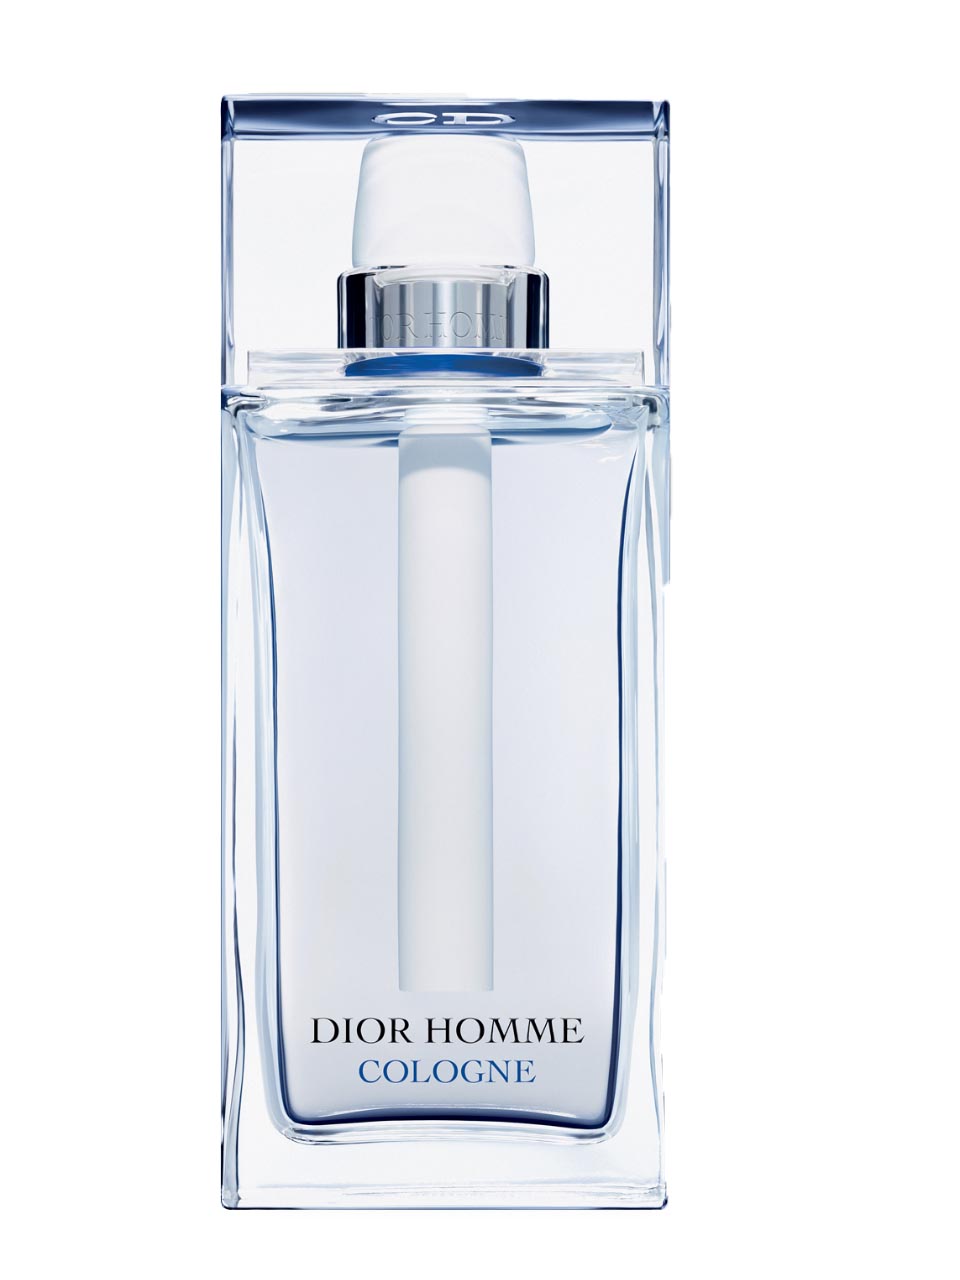 Dior Homme C F091955009 EDCS null - onesize - 1